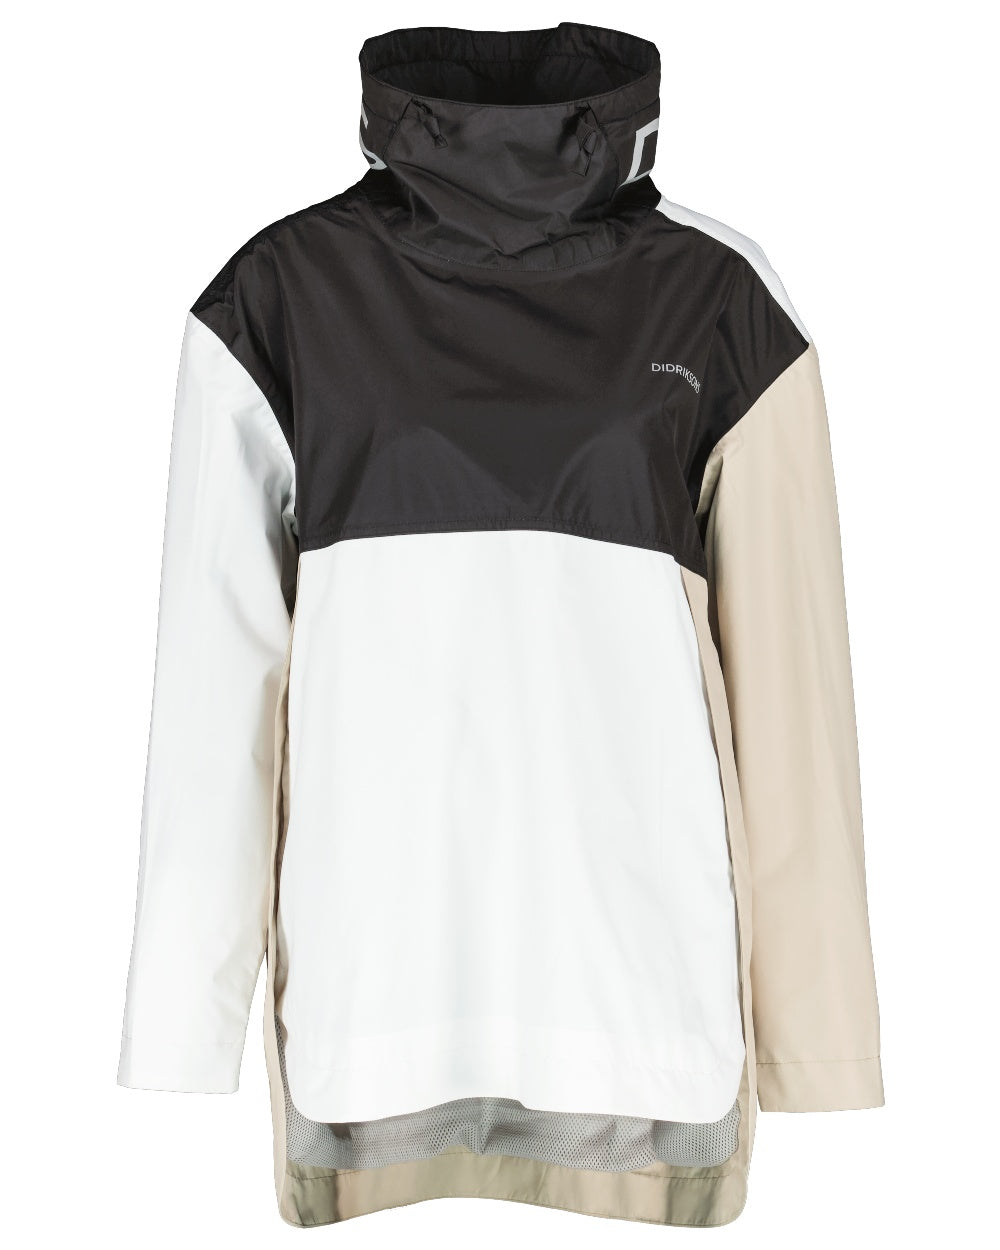 Beige/Black/White coloured Didriksons Thyra Womens Jacket 2 on white background 